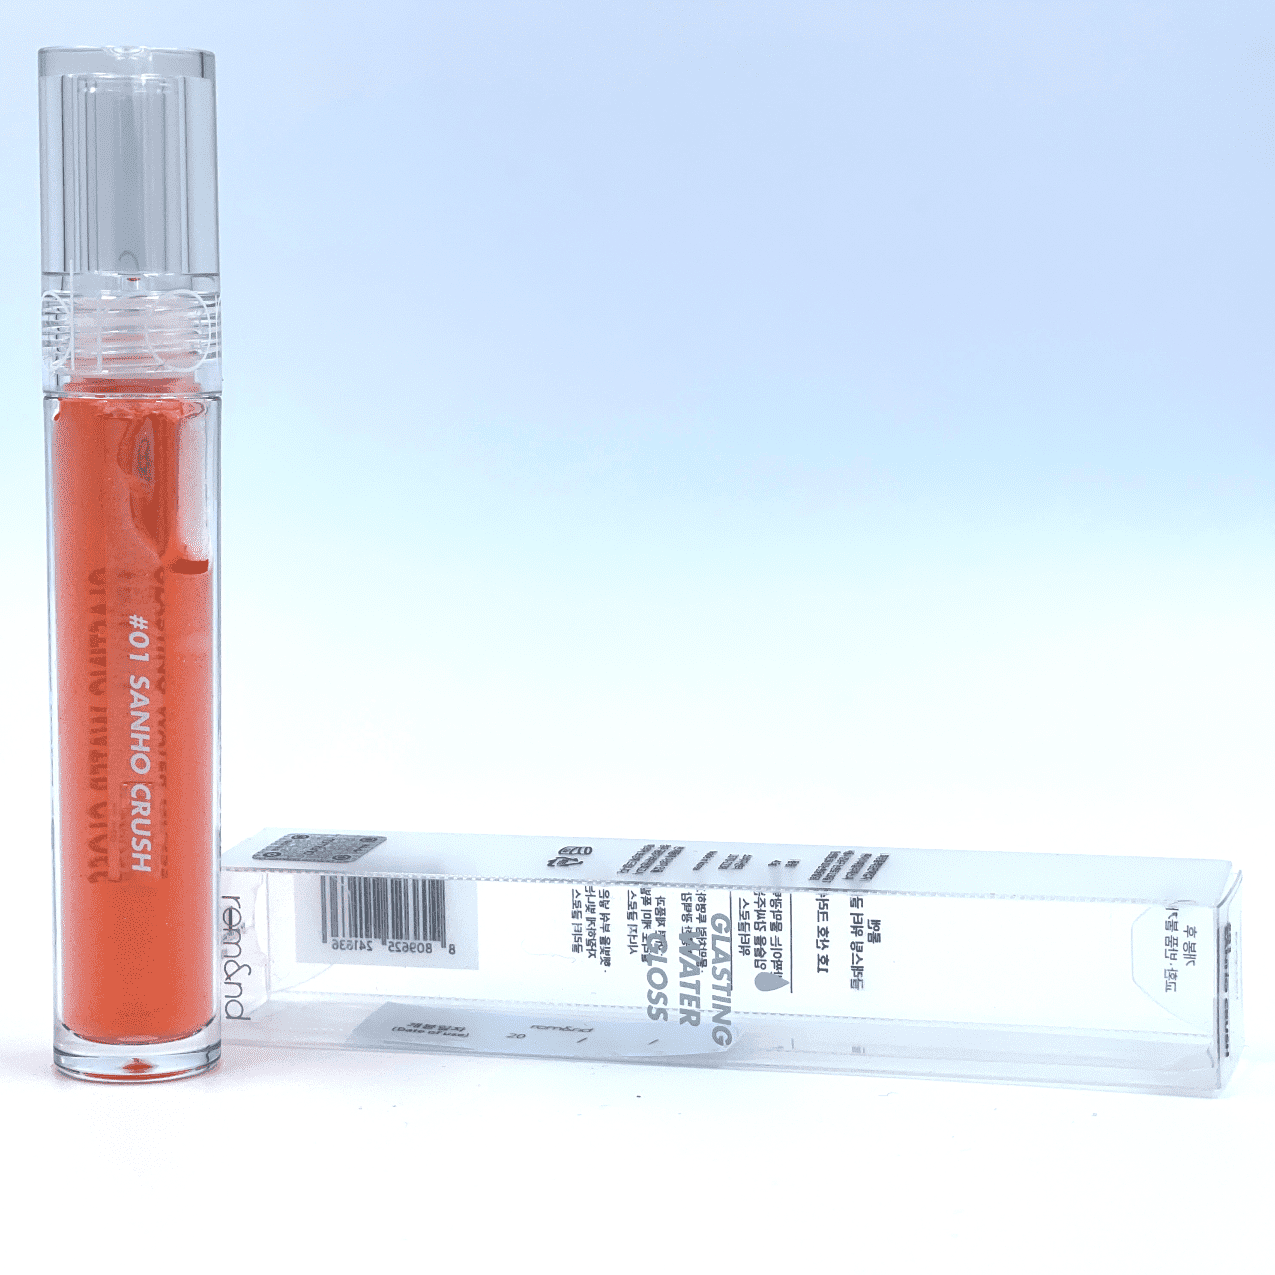 Glasting Water Gloss | Brillo para labios (2 tonos) - Koelleza Store